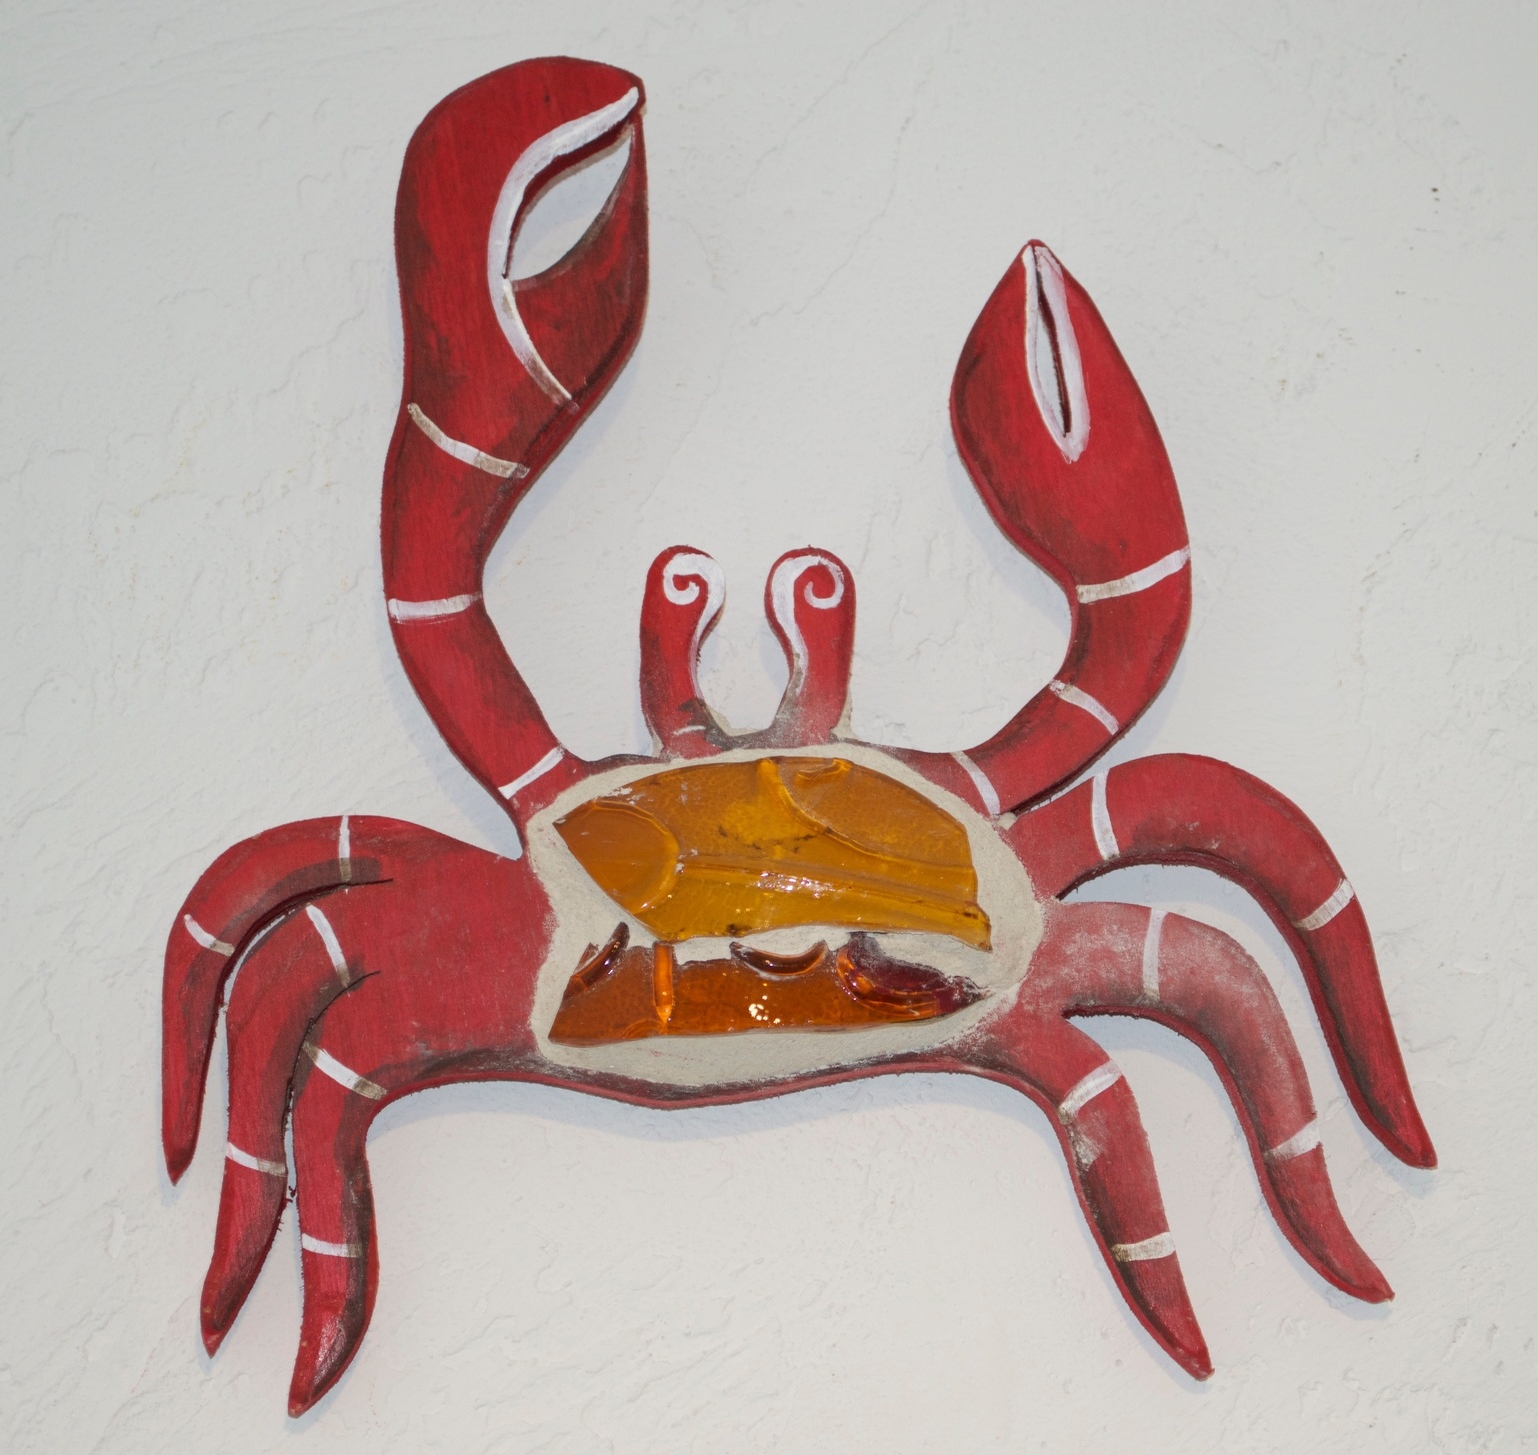 Beach Art - Crab - wood, carnival glass - sm. 9" x 10", $36, large 14" x 14", $55